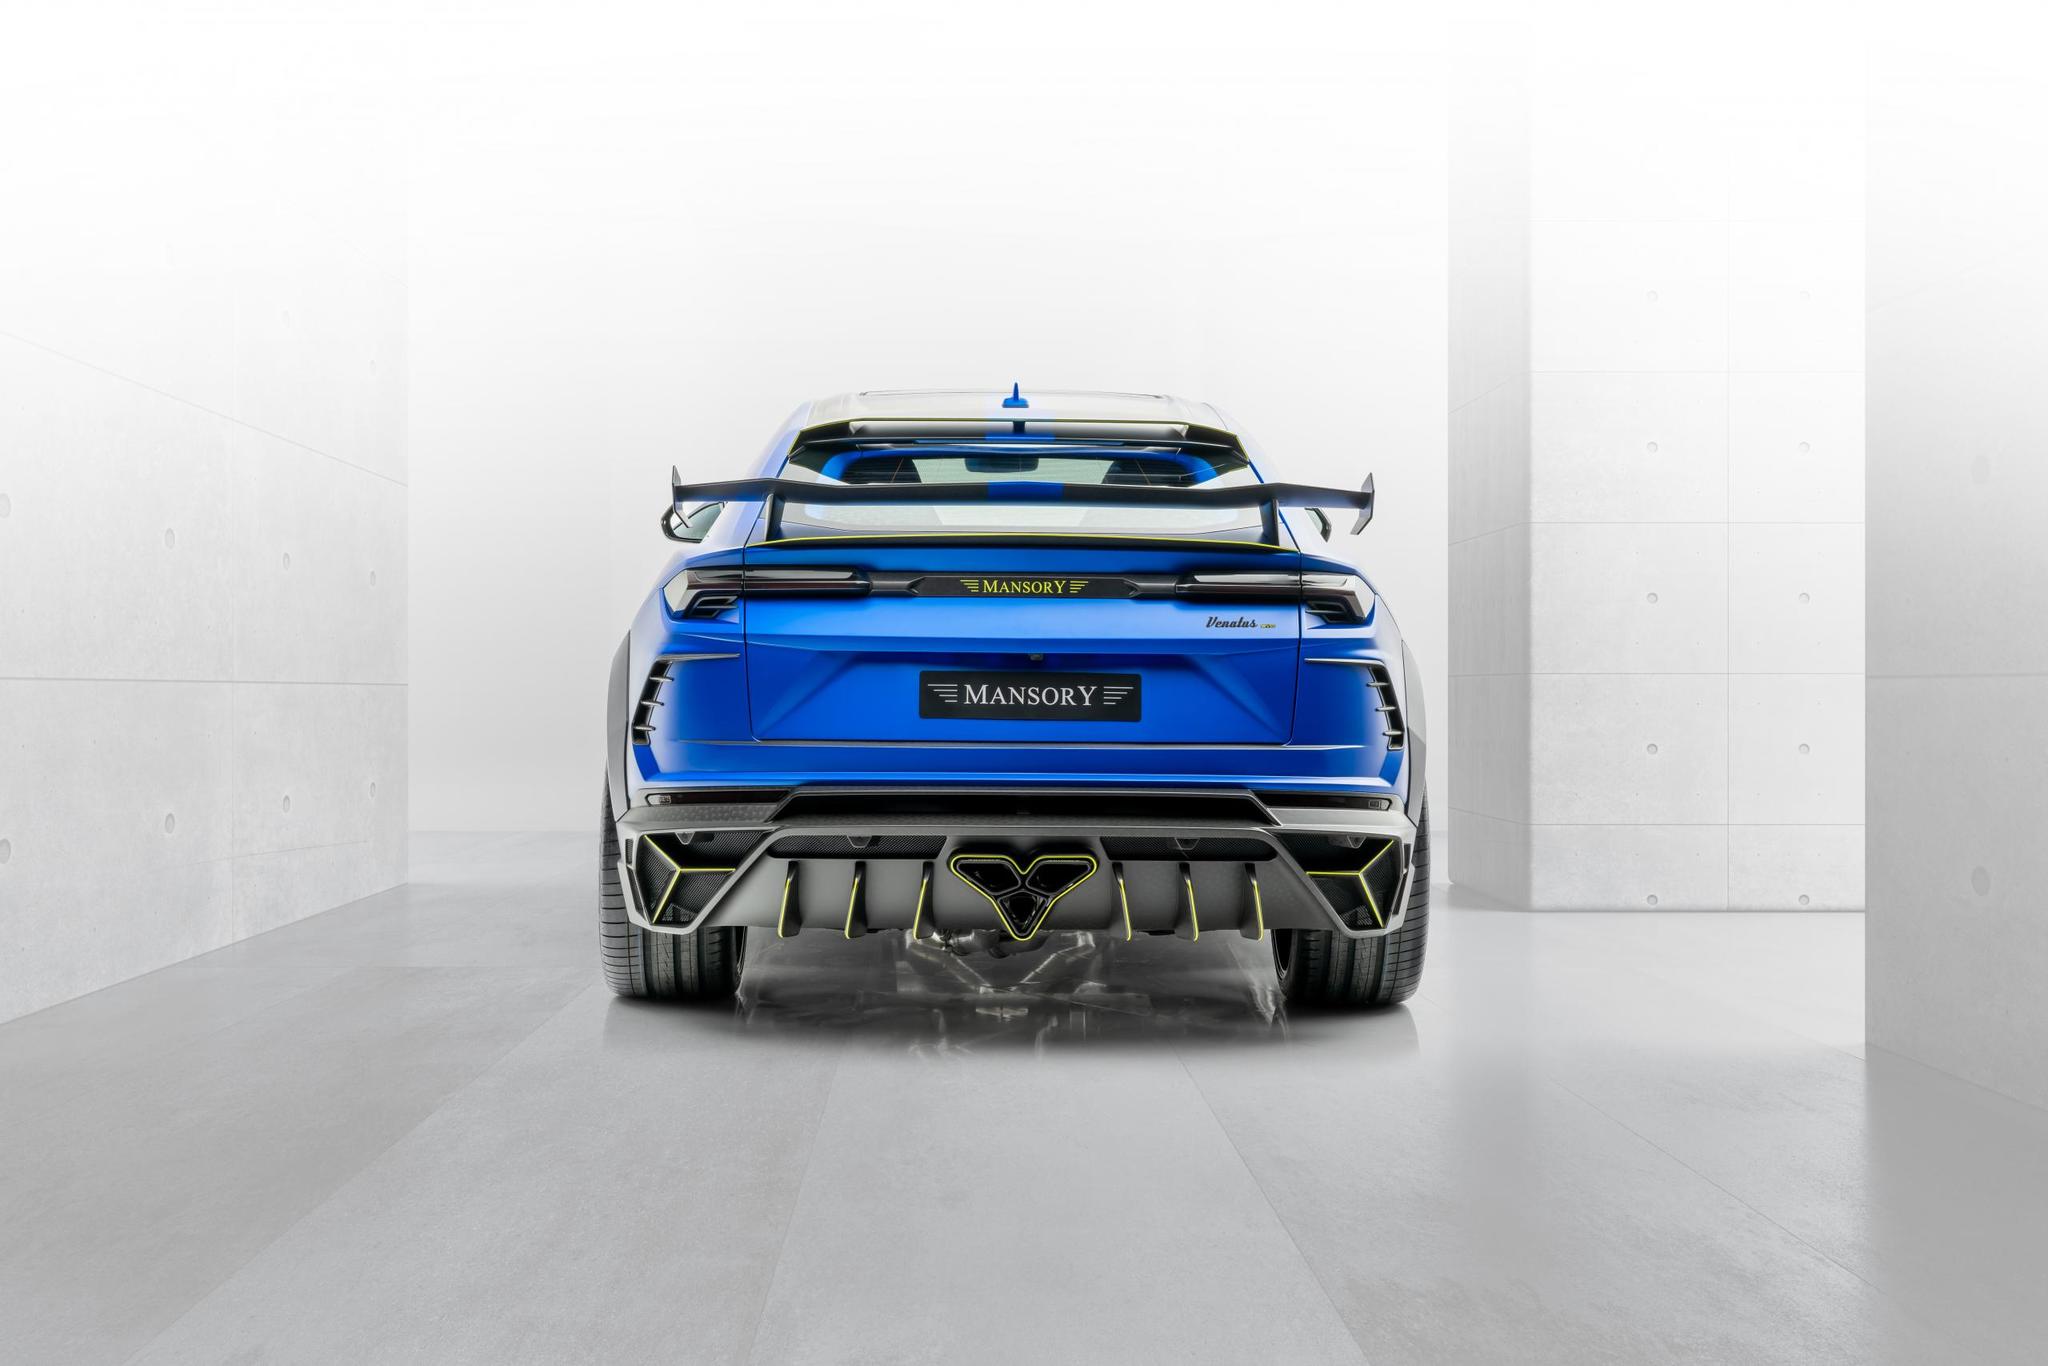 Mansory body kit for Lamborghini Urus new style